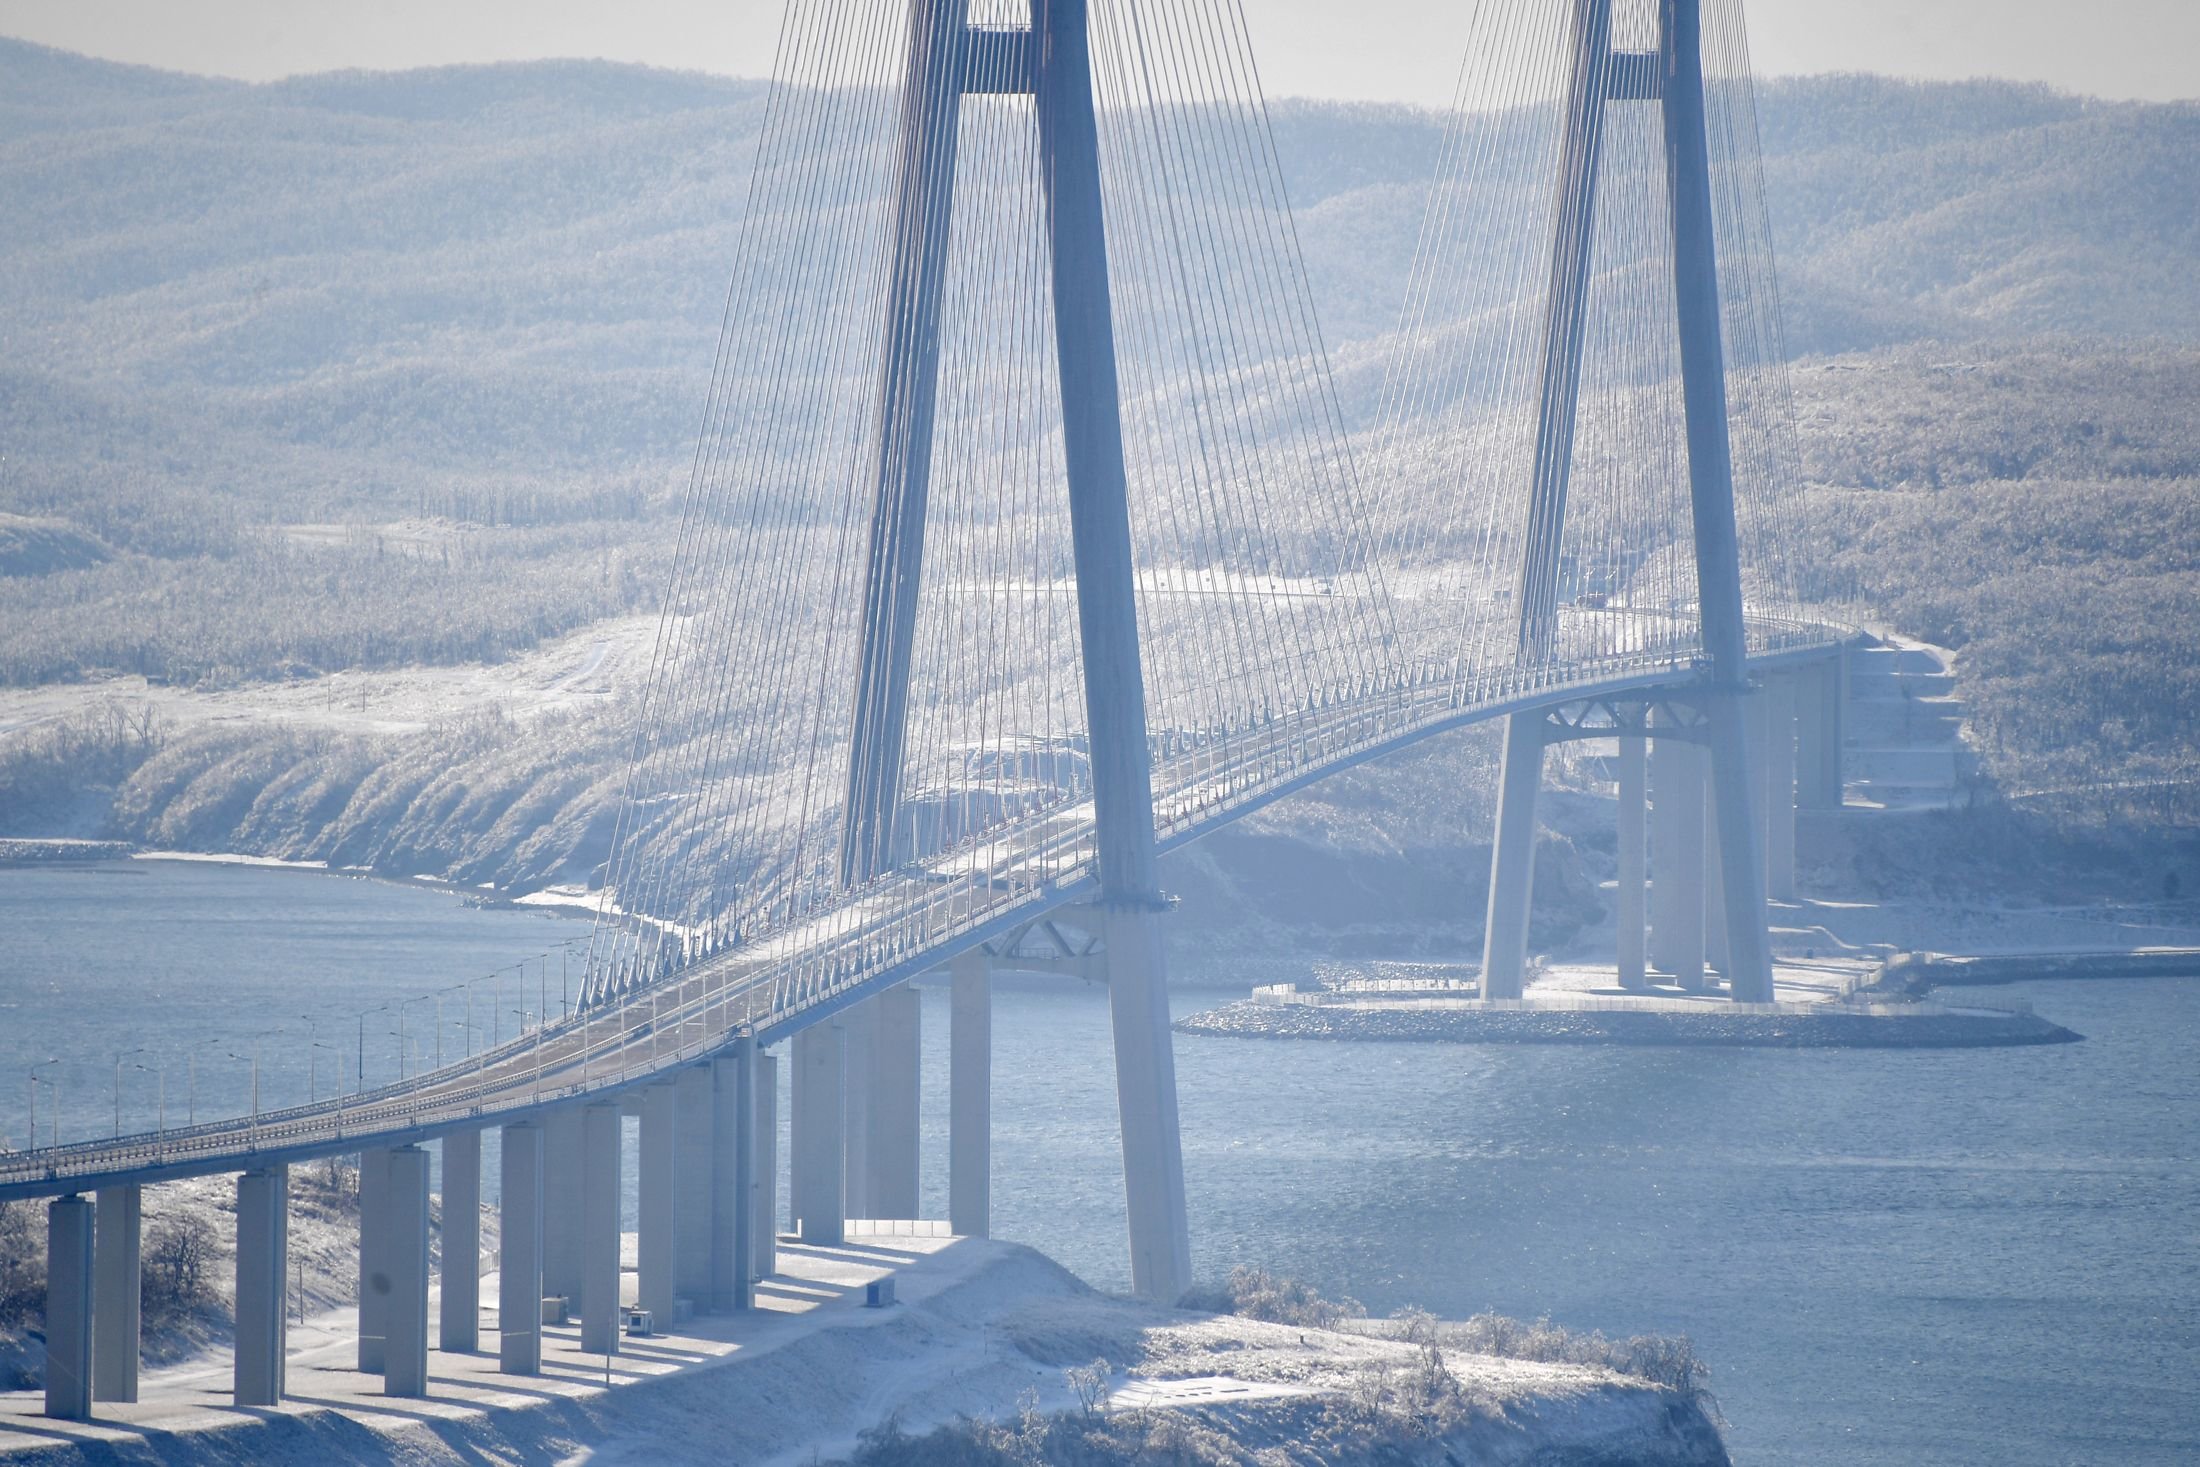 Русский мост Владивосток